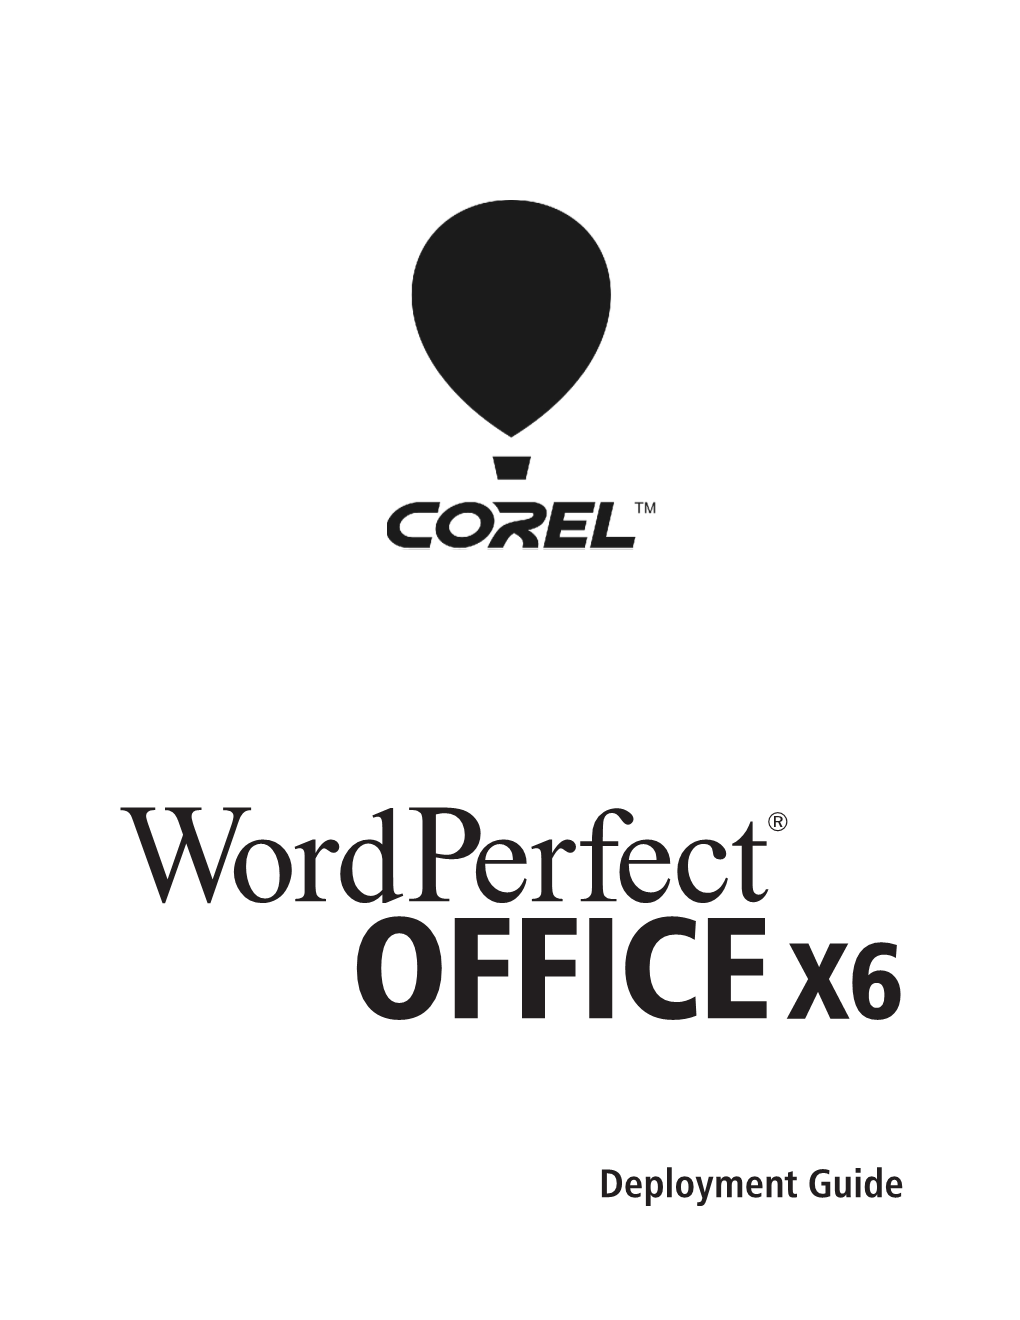 Wordperfect Office X6 Deployment Guide